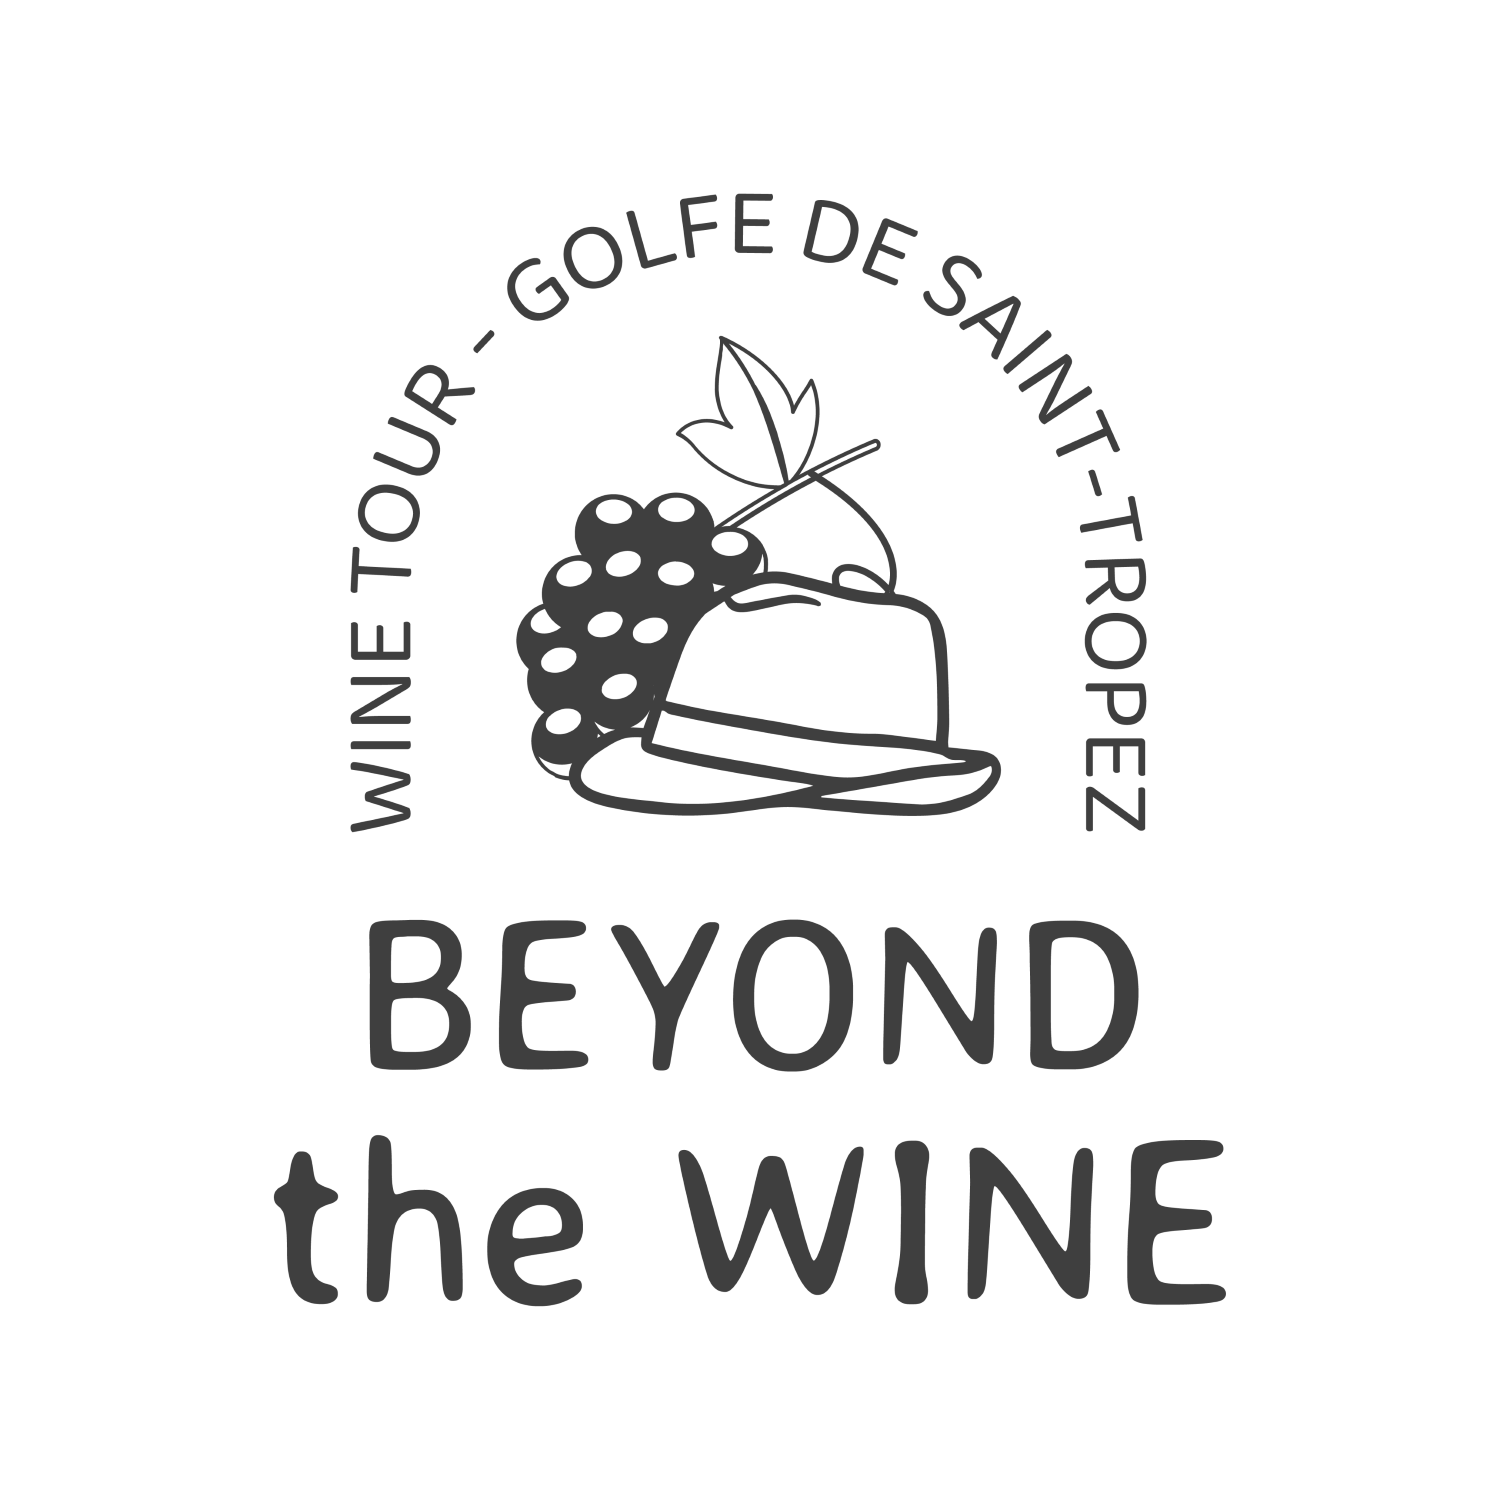 Logo Beyond the wine